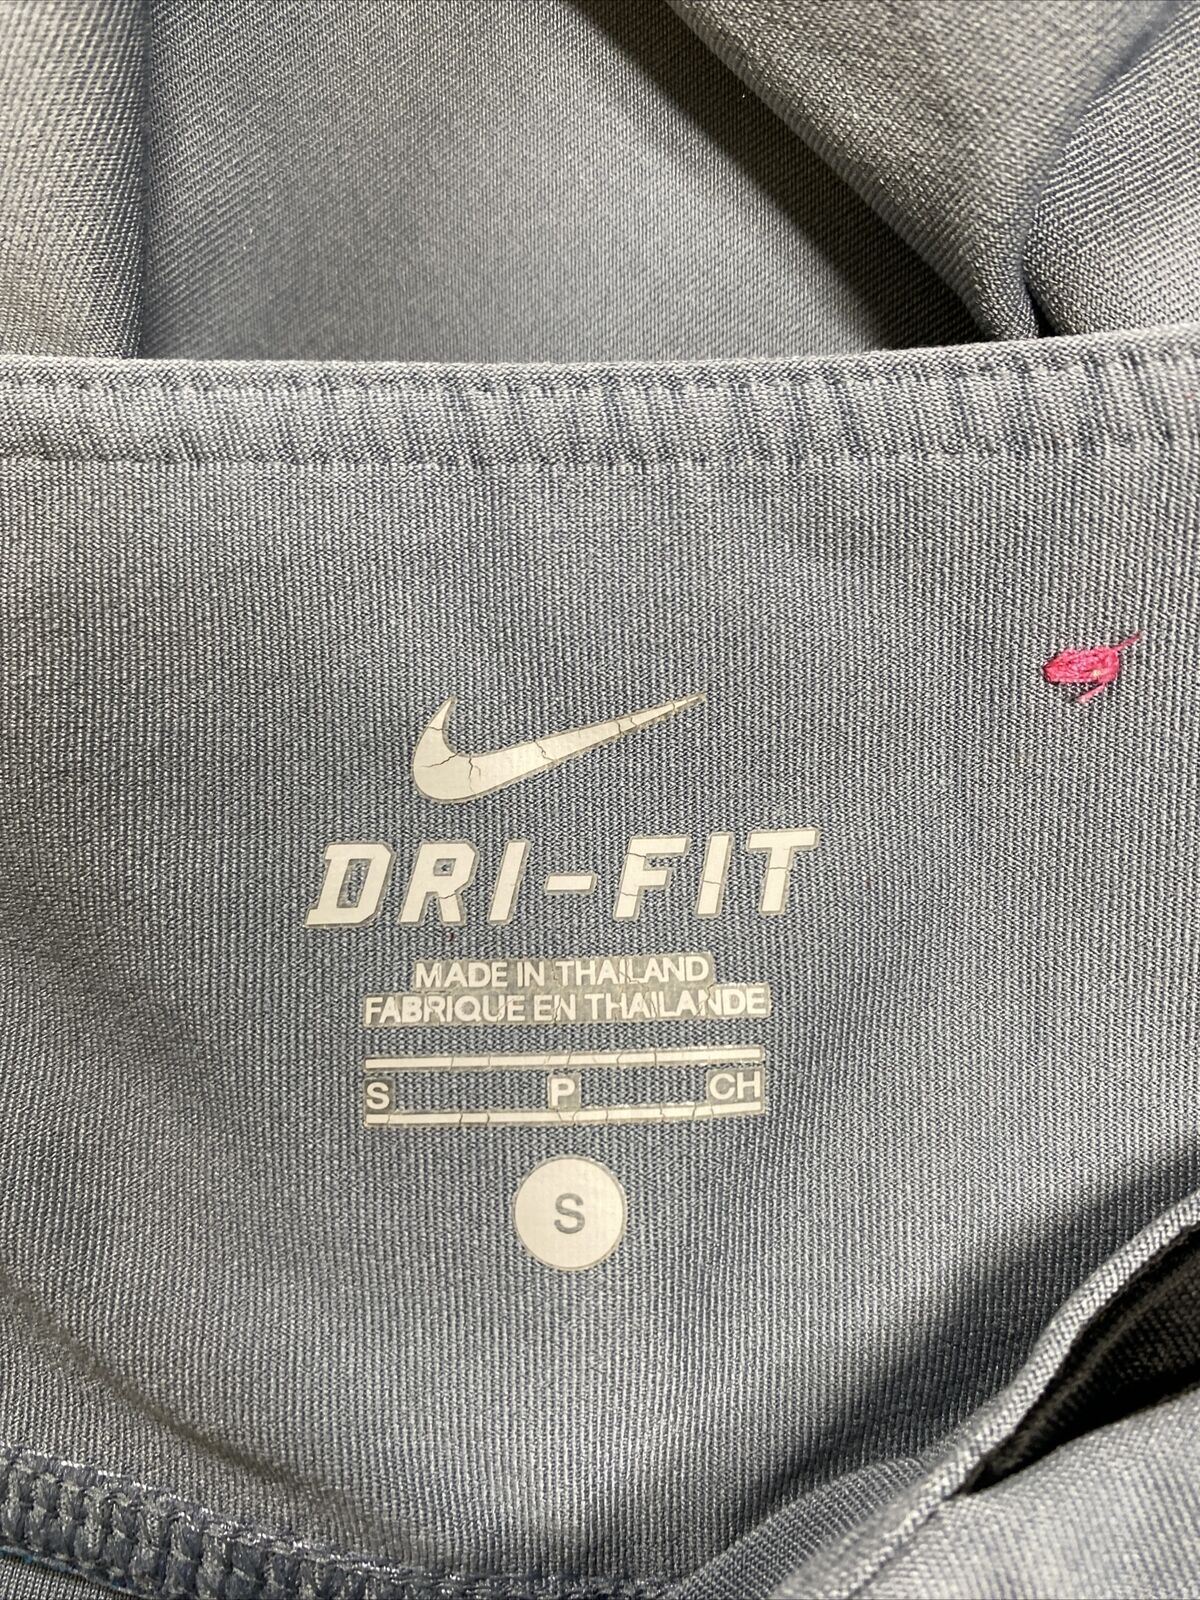 Nike Women's Gray Dri-Fit Semi Fitted Yoga Pants - S